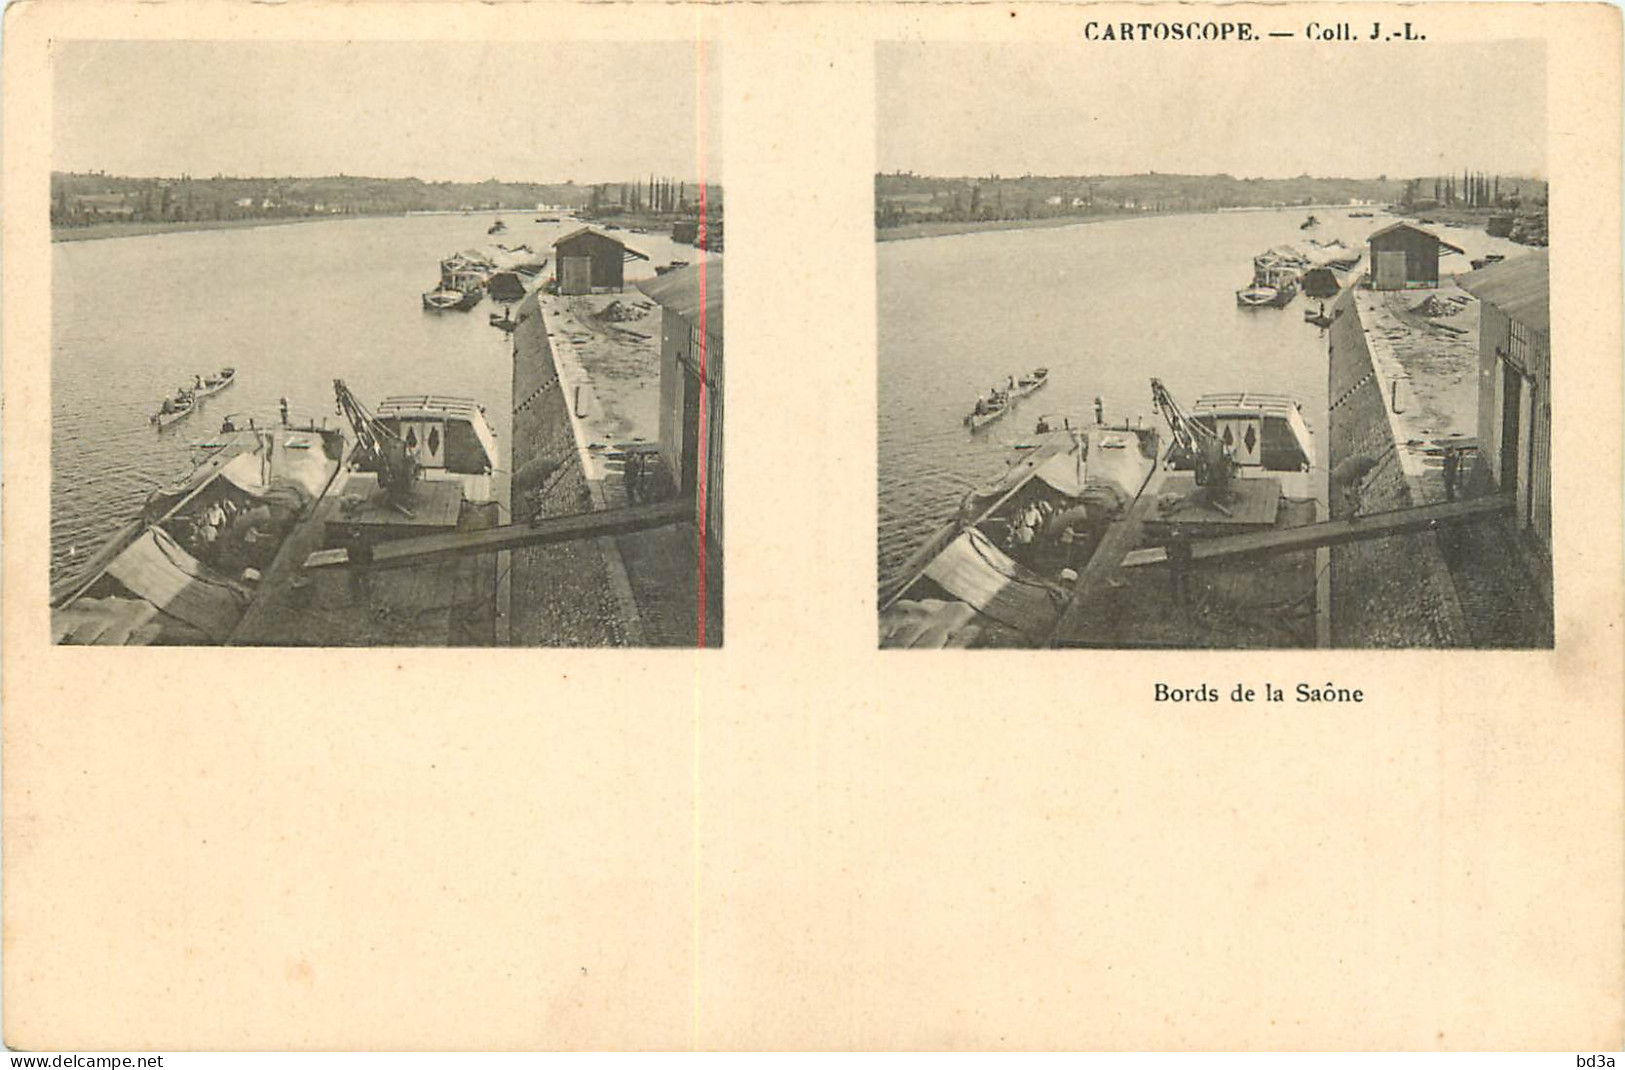 CARTE STEREOSCOPIQUE - BORDS DE LA SAONE - CARTOSCOPE - COLL J.L. - Cartes Stéréoscopiques